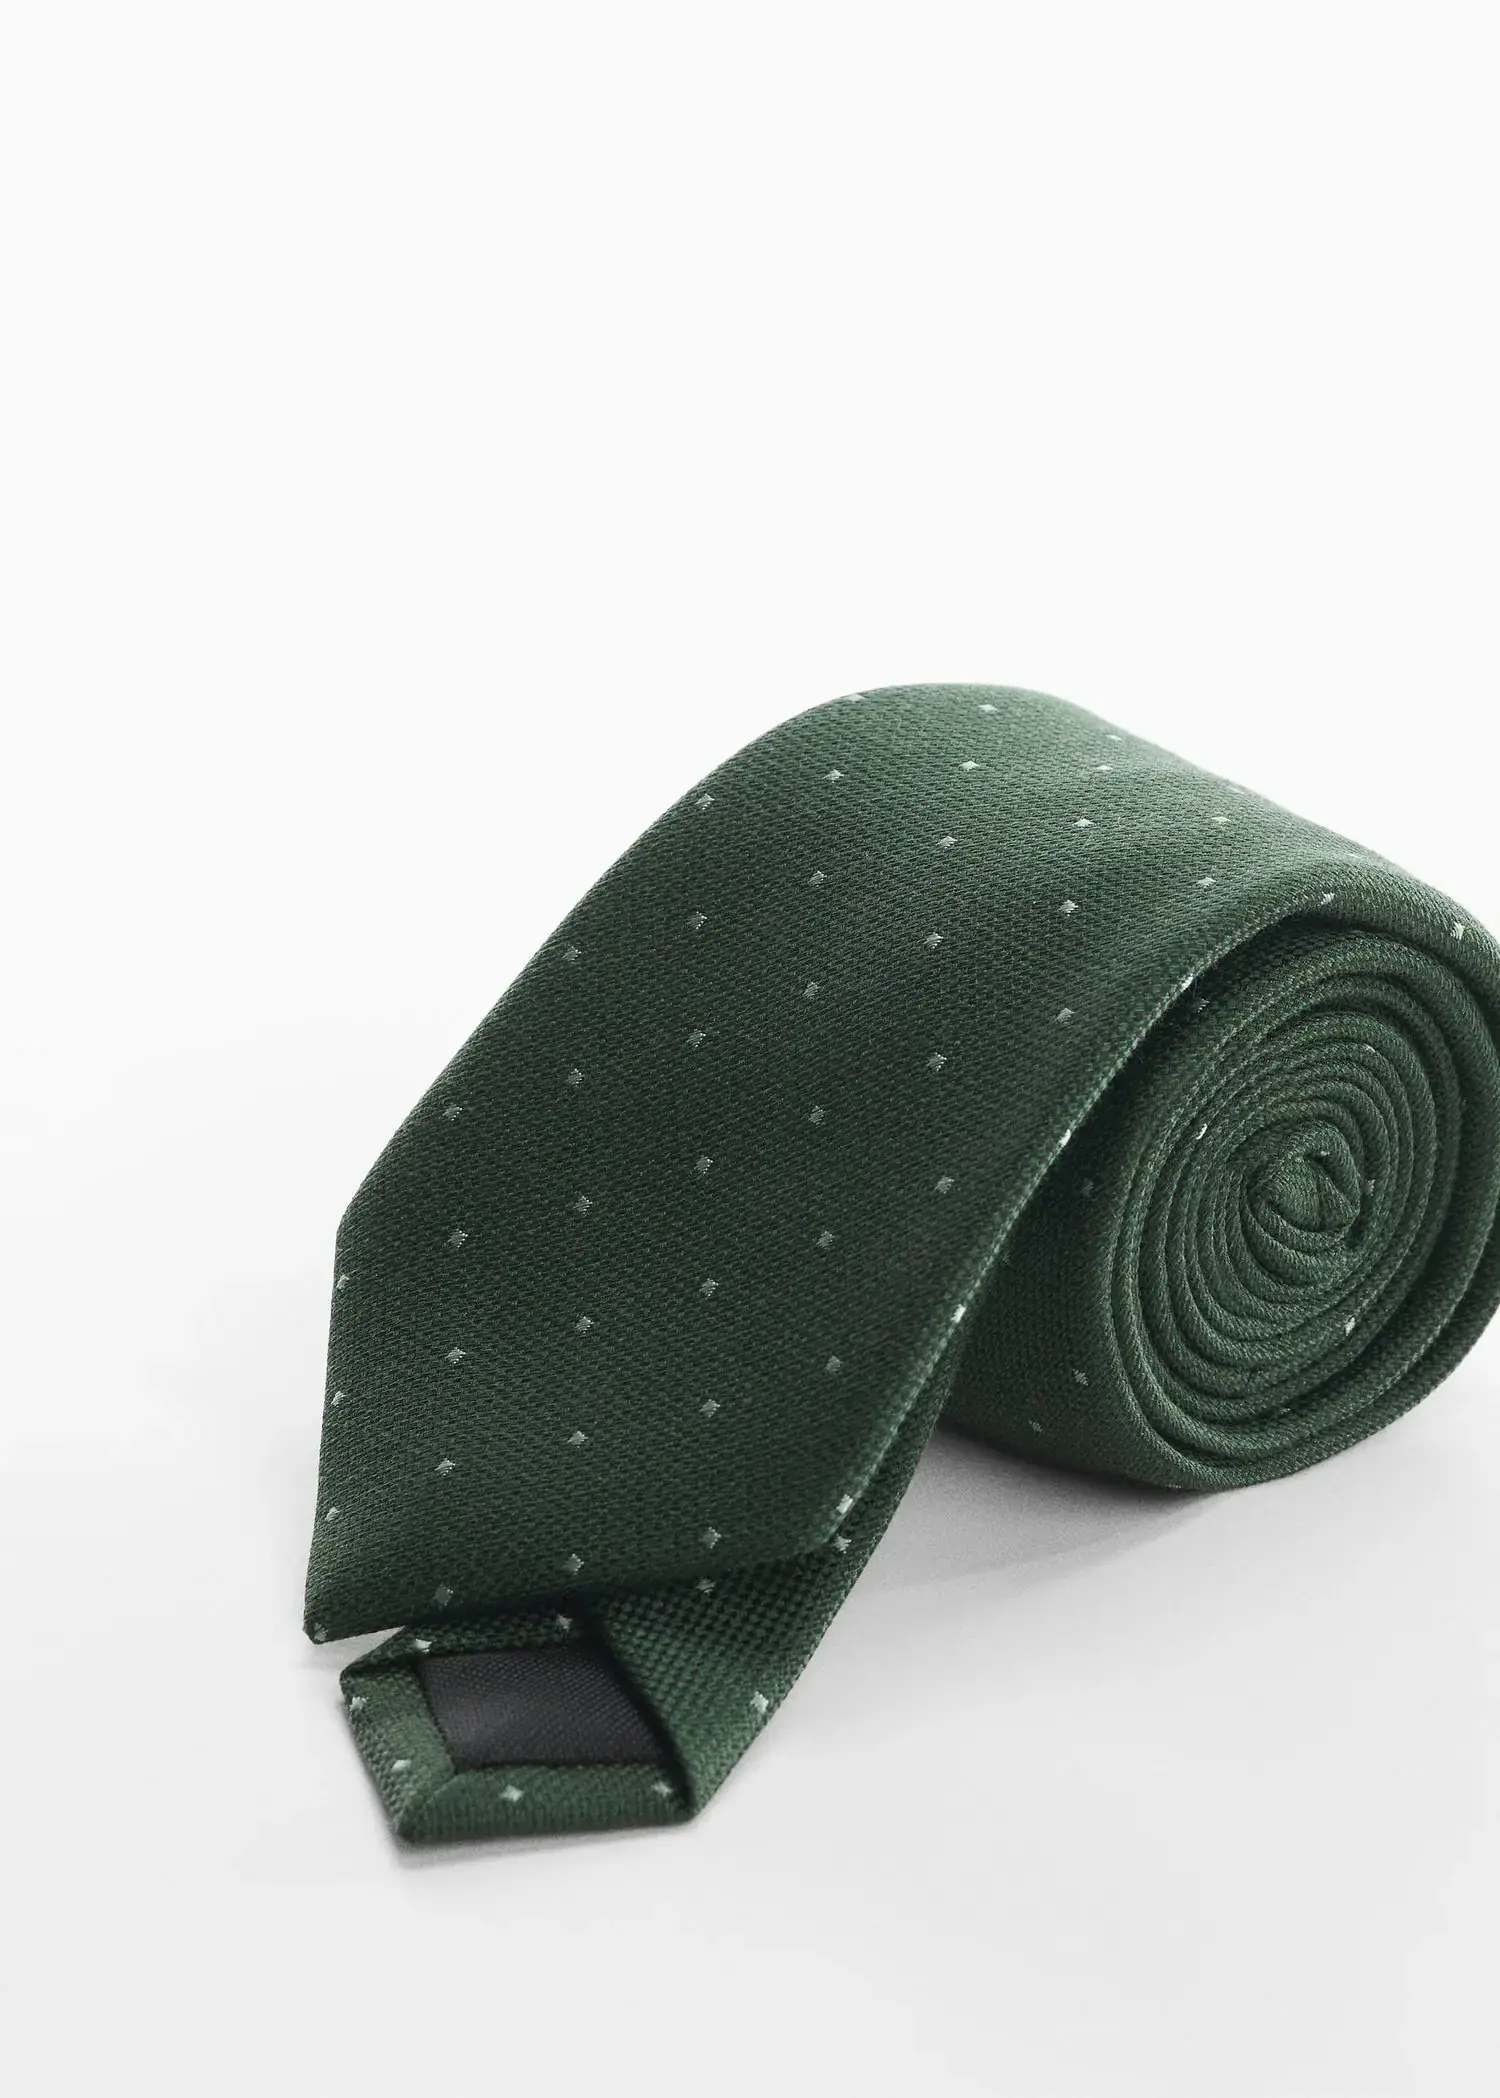 Mango Mikro puantiyeli biçimli kravat. 2